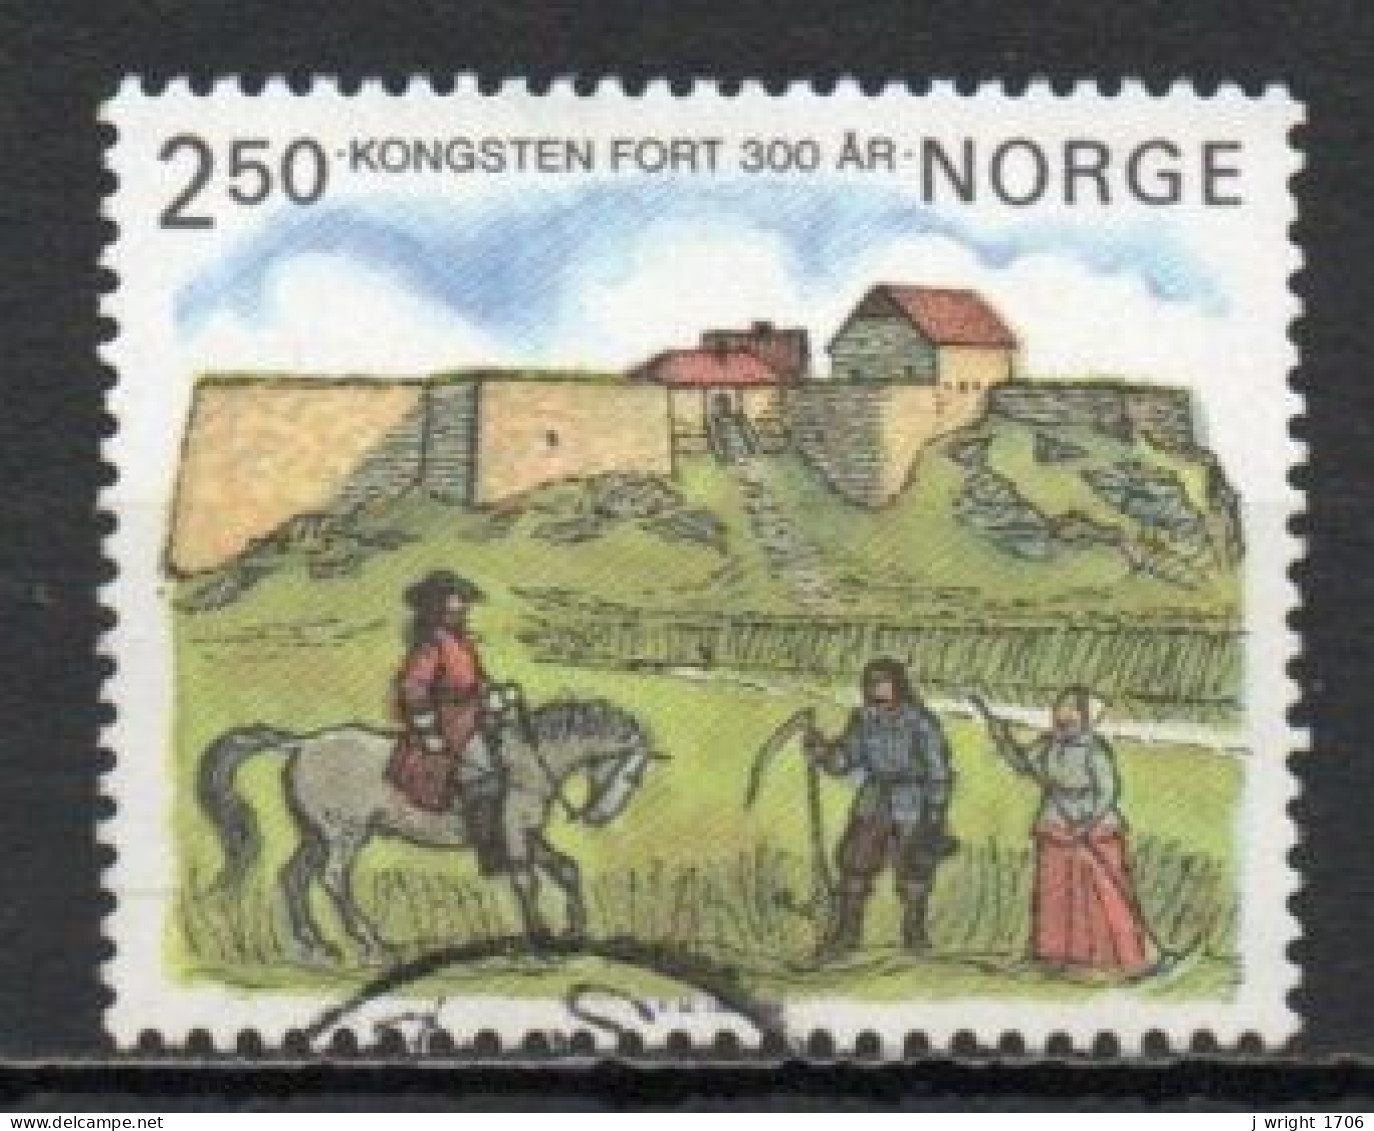 Norway, 1985, Kongsten Fort 300th Anniv, Set, USED - Oblitérés